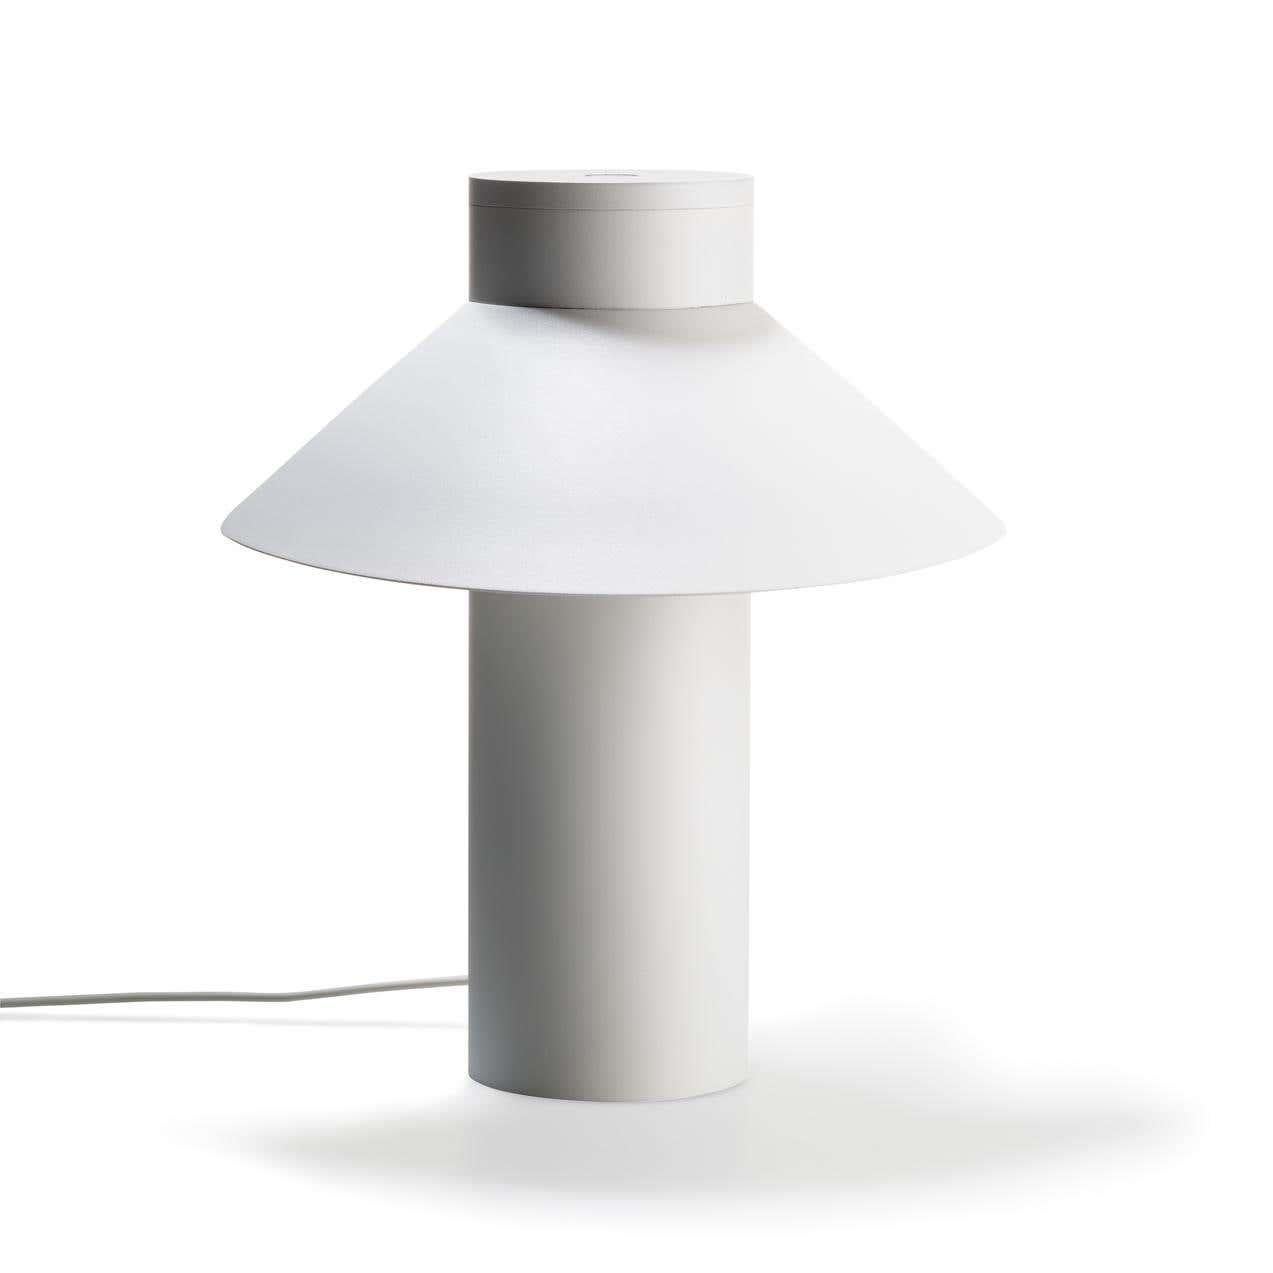 Joe Colombo 'Riscio' Steel Table Lamp by Karakter In New Condition For Sale In Barcelona, Barcelona